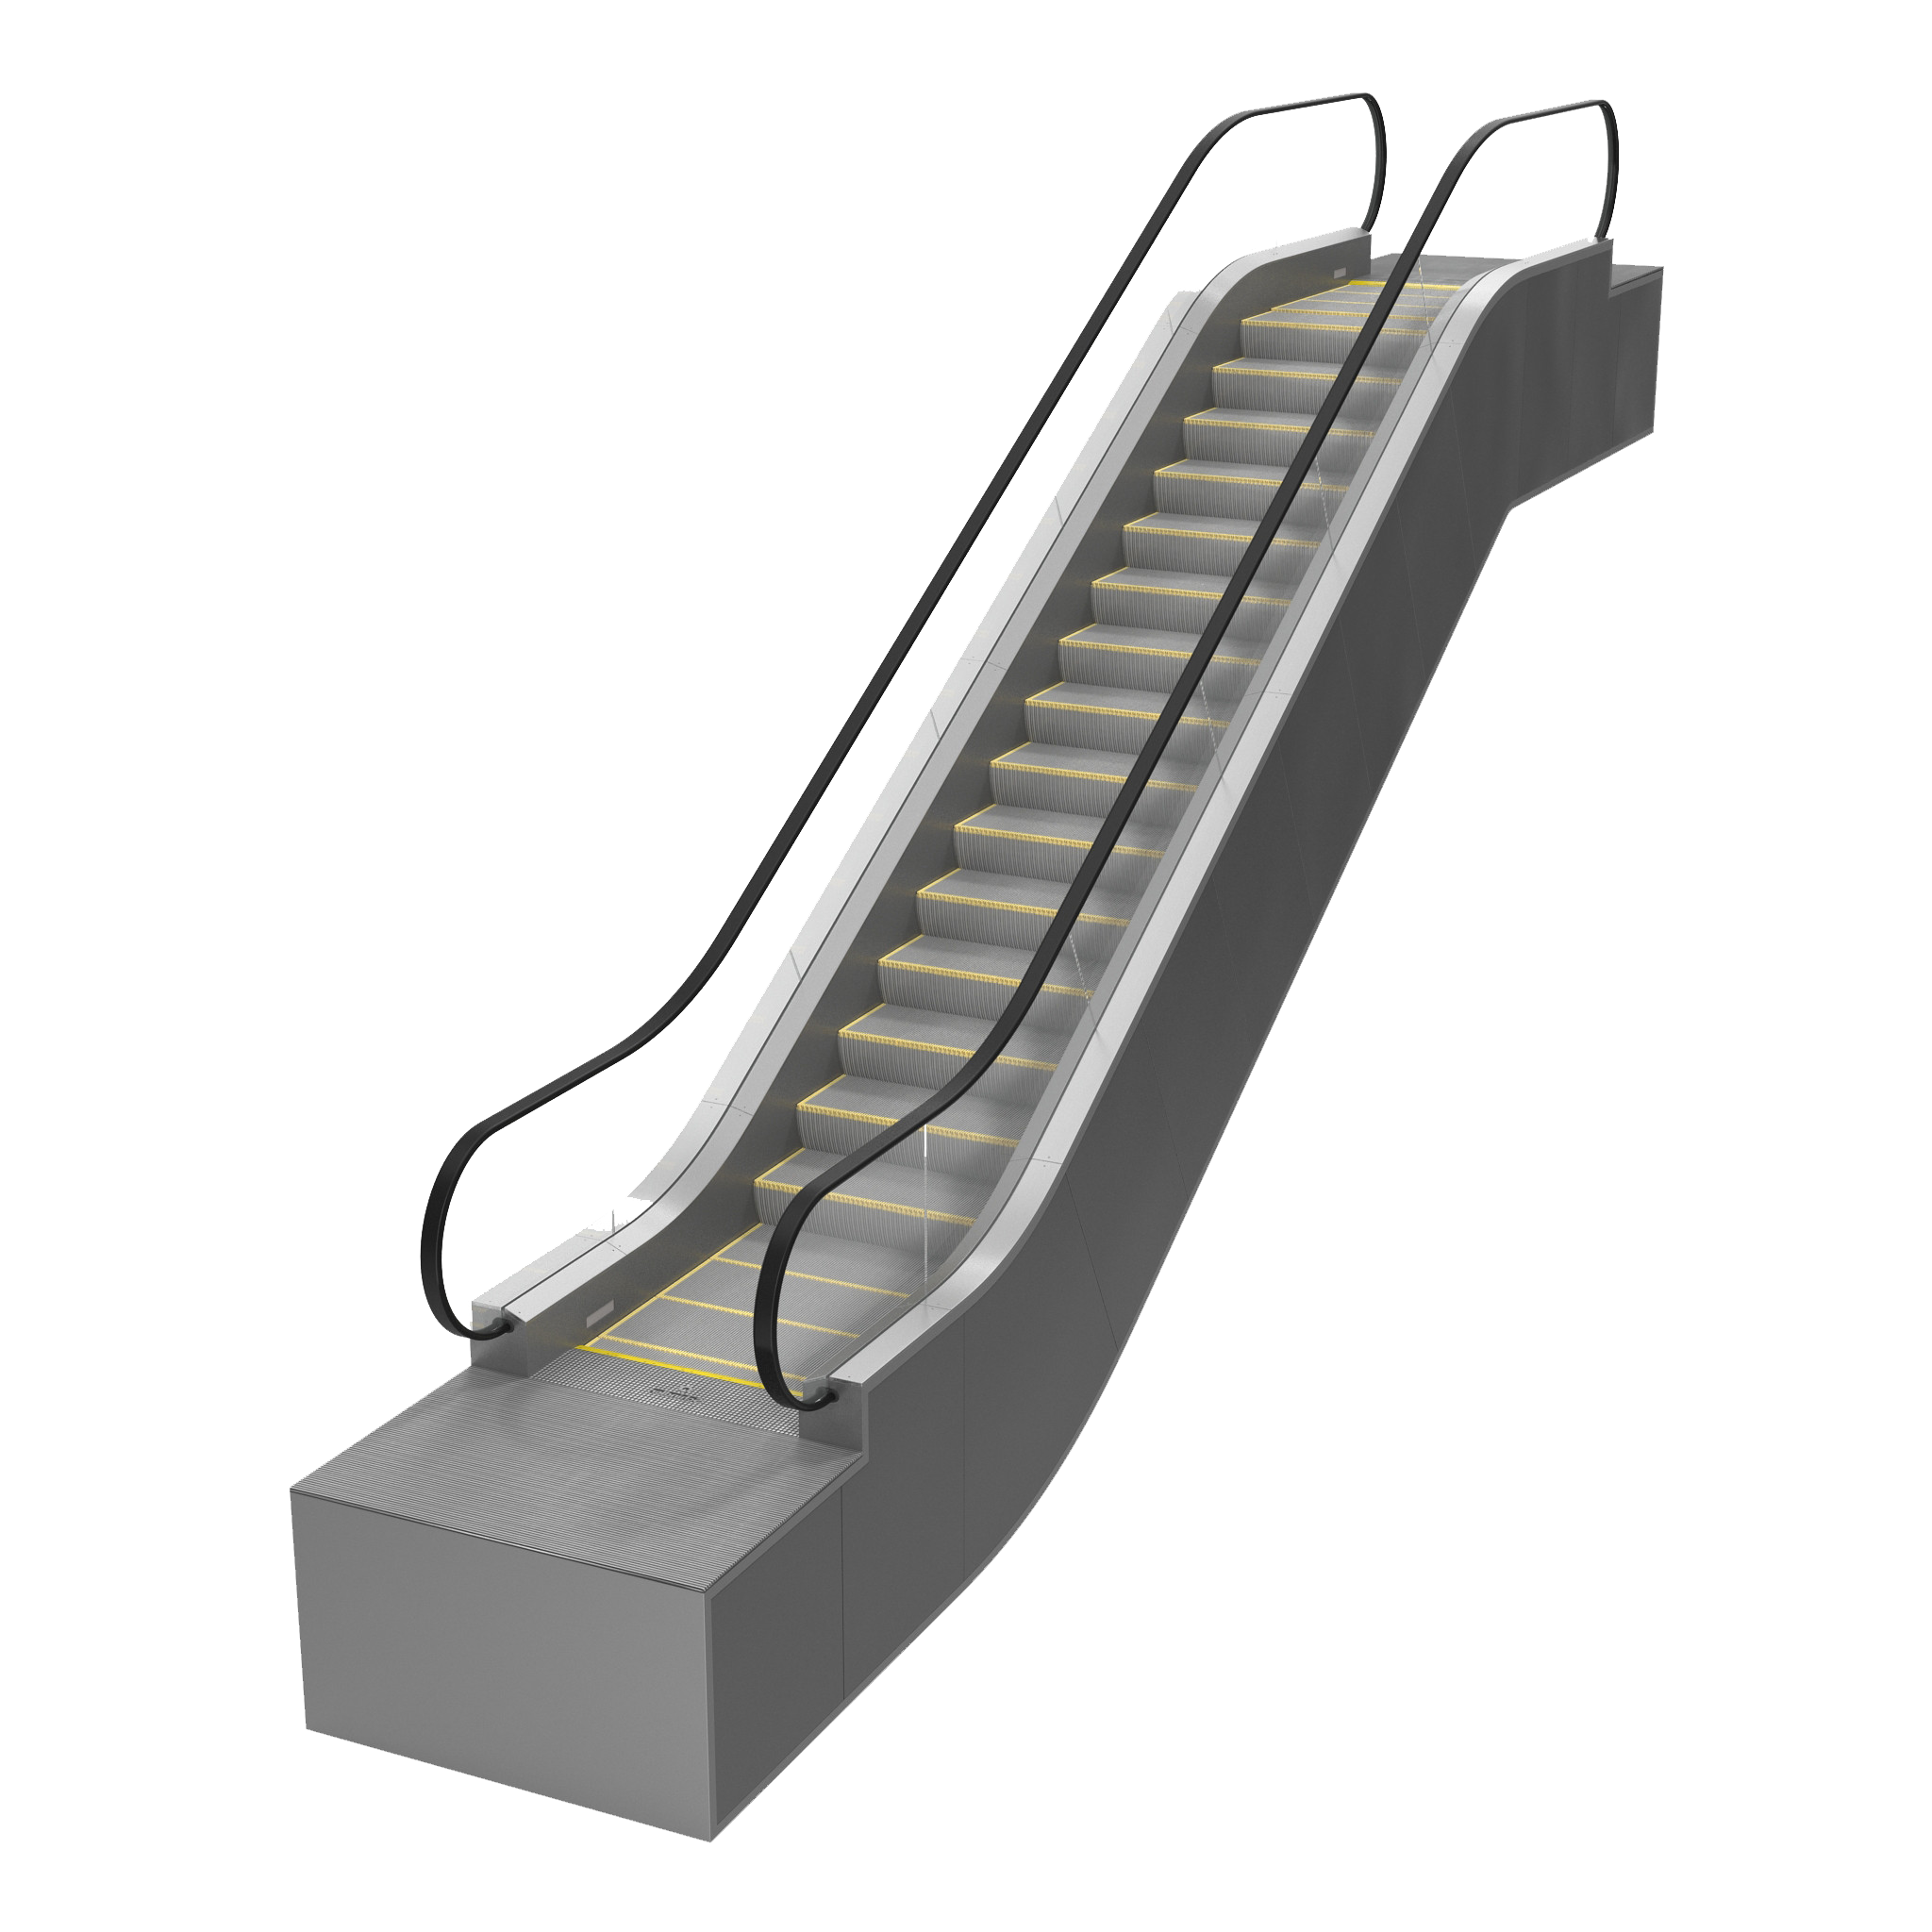 Escalator Image PNG Image